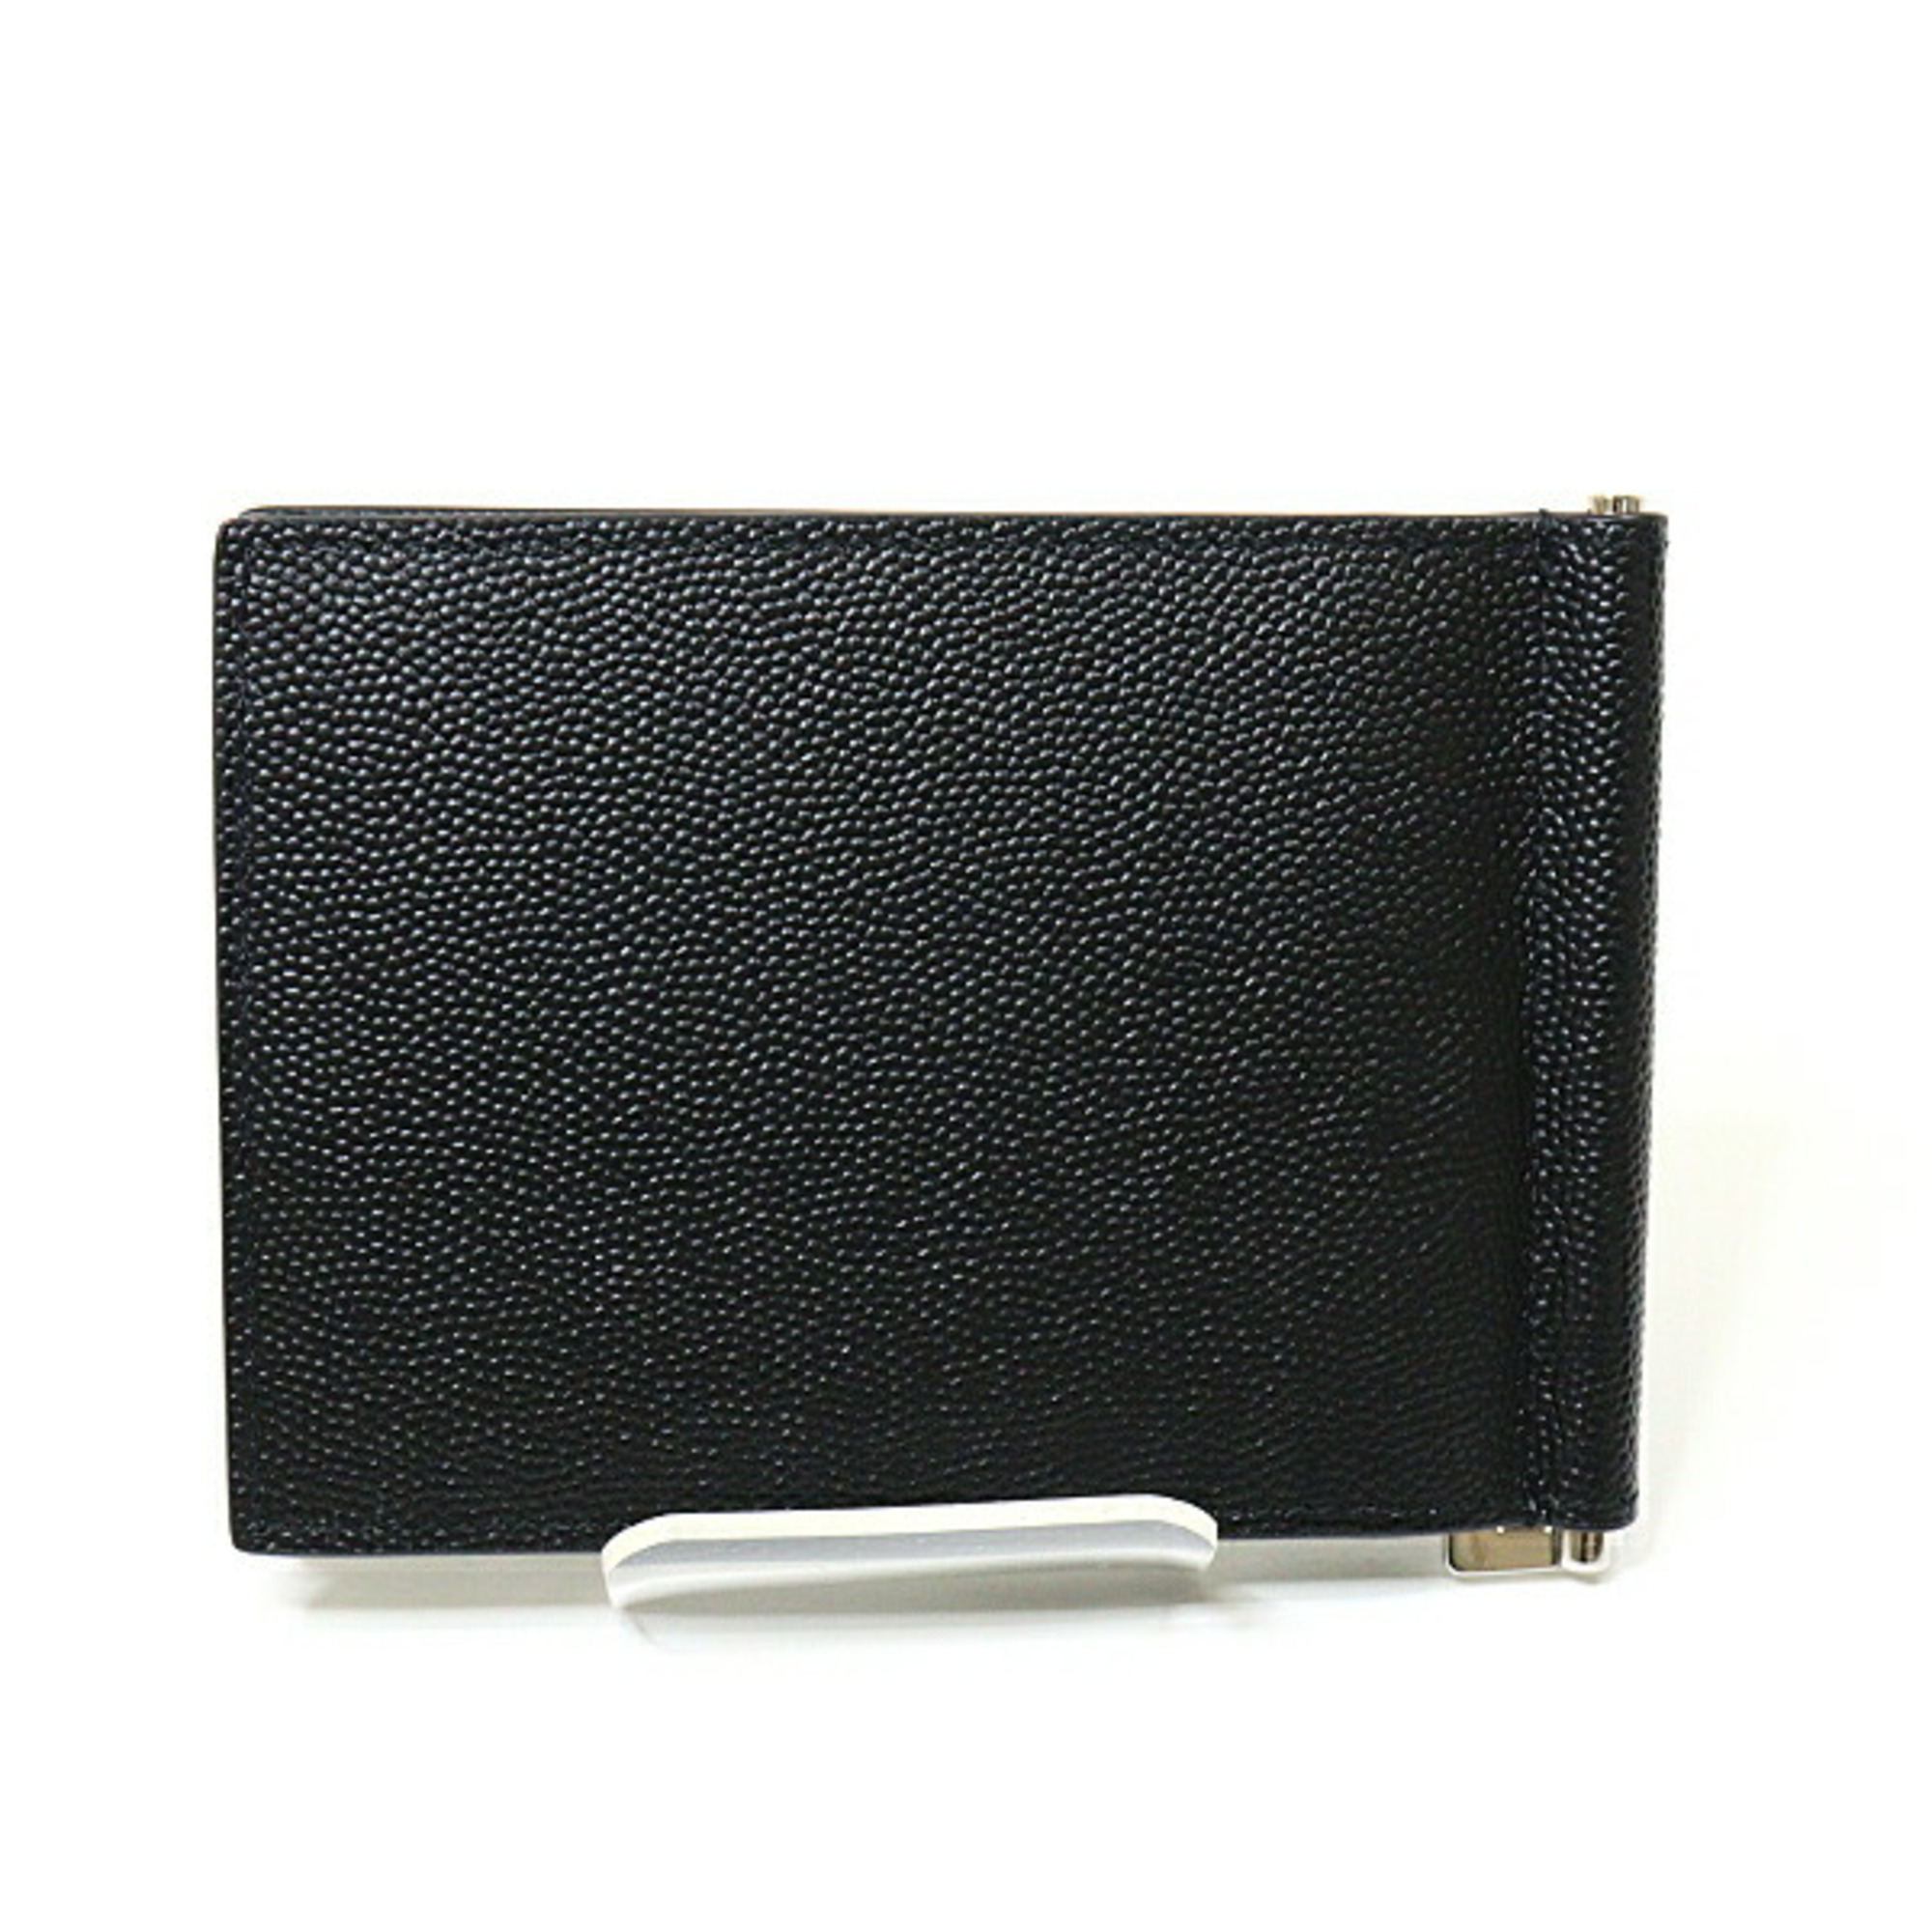 Saint Laurent SAINT LAURENT Money Clip 378005 Billfold Bifold Wallet Leather Black Silver Hardware